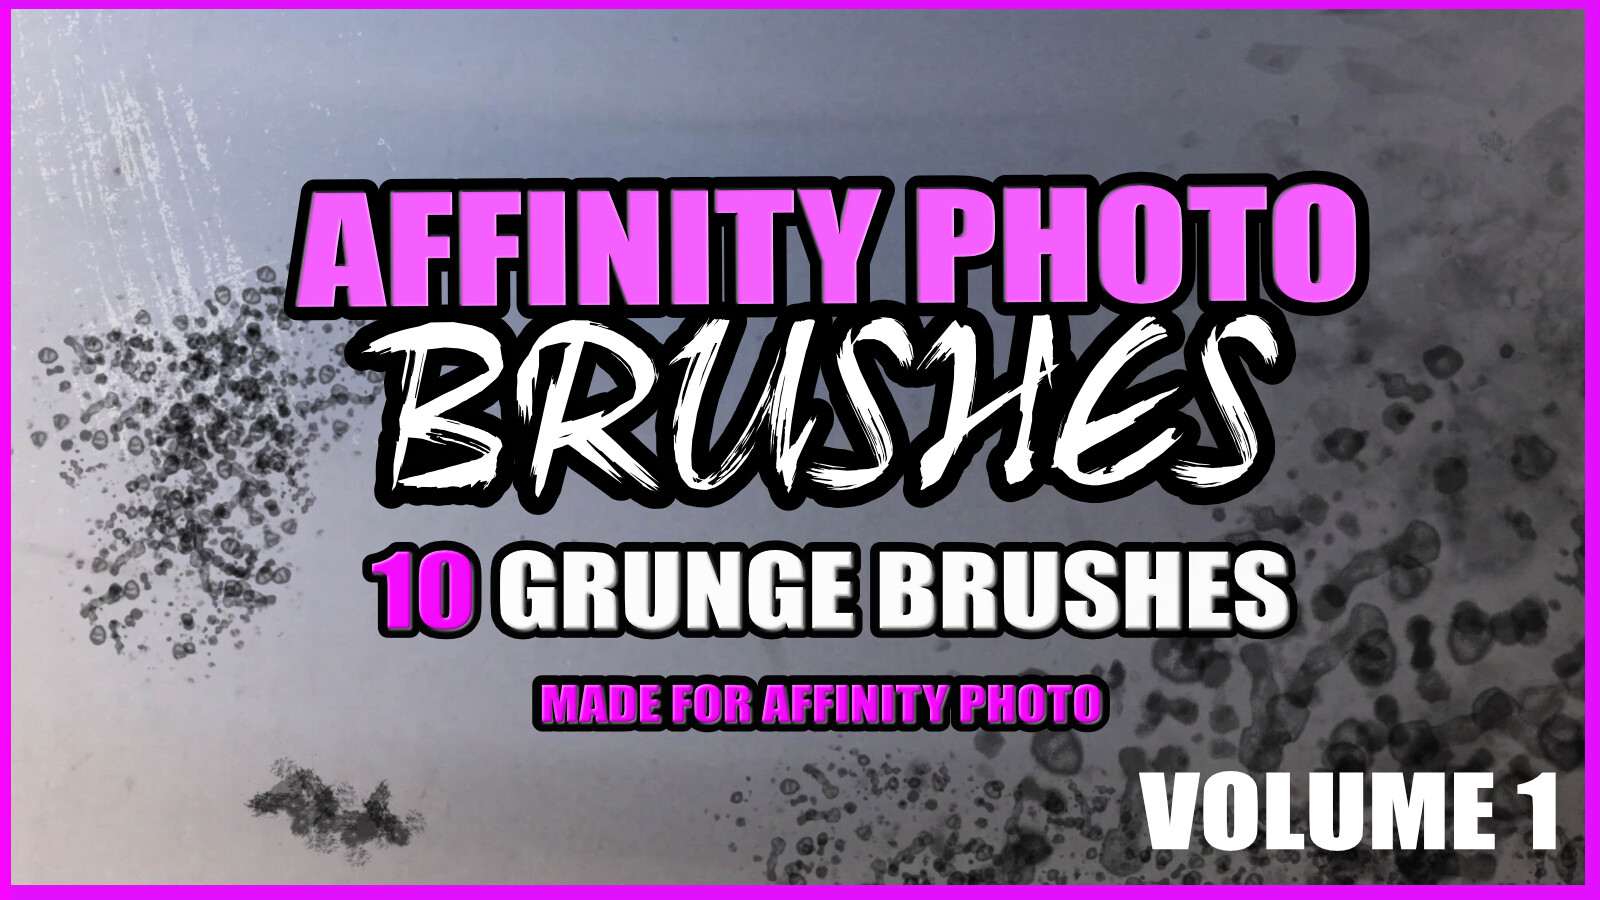 free affinity designer distressed brushes